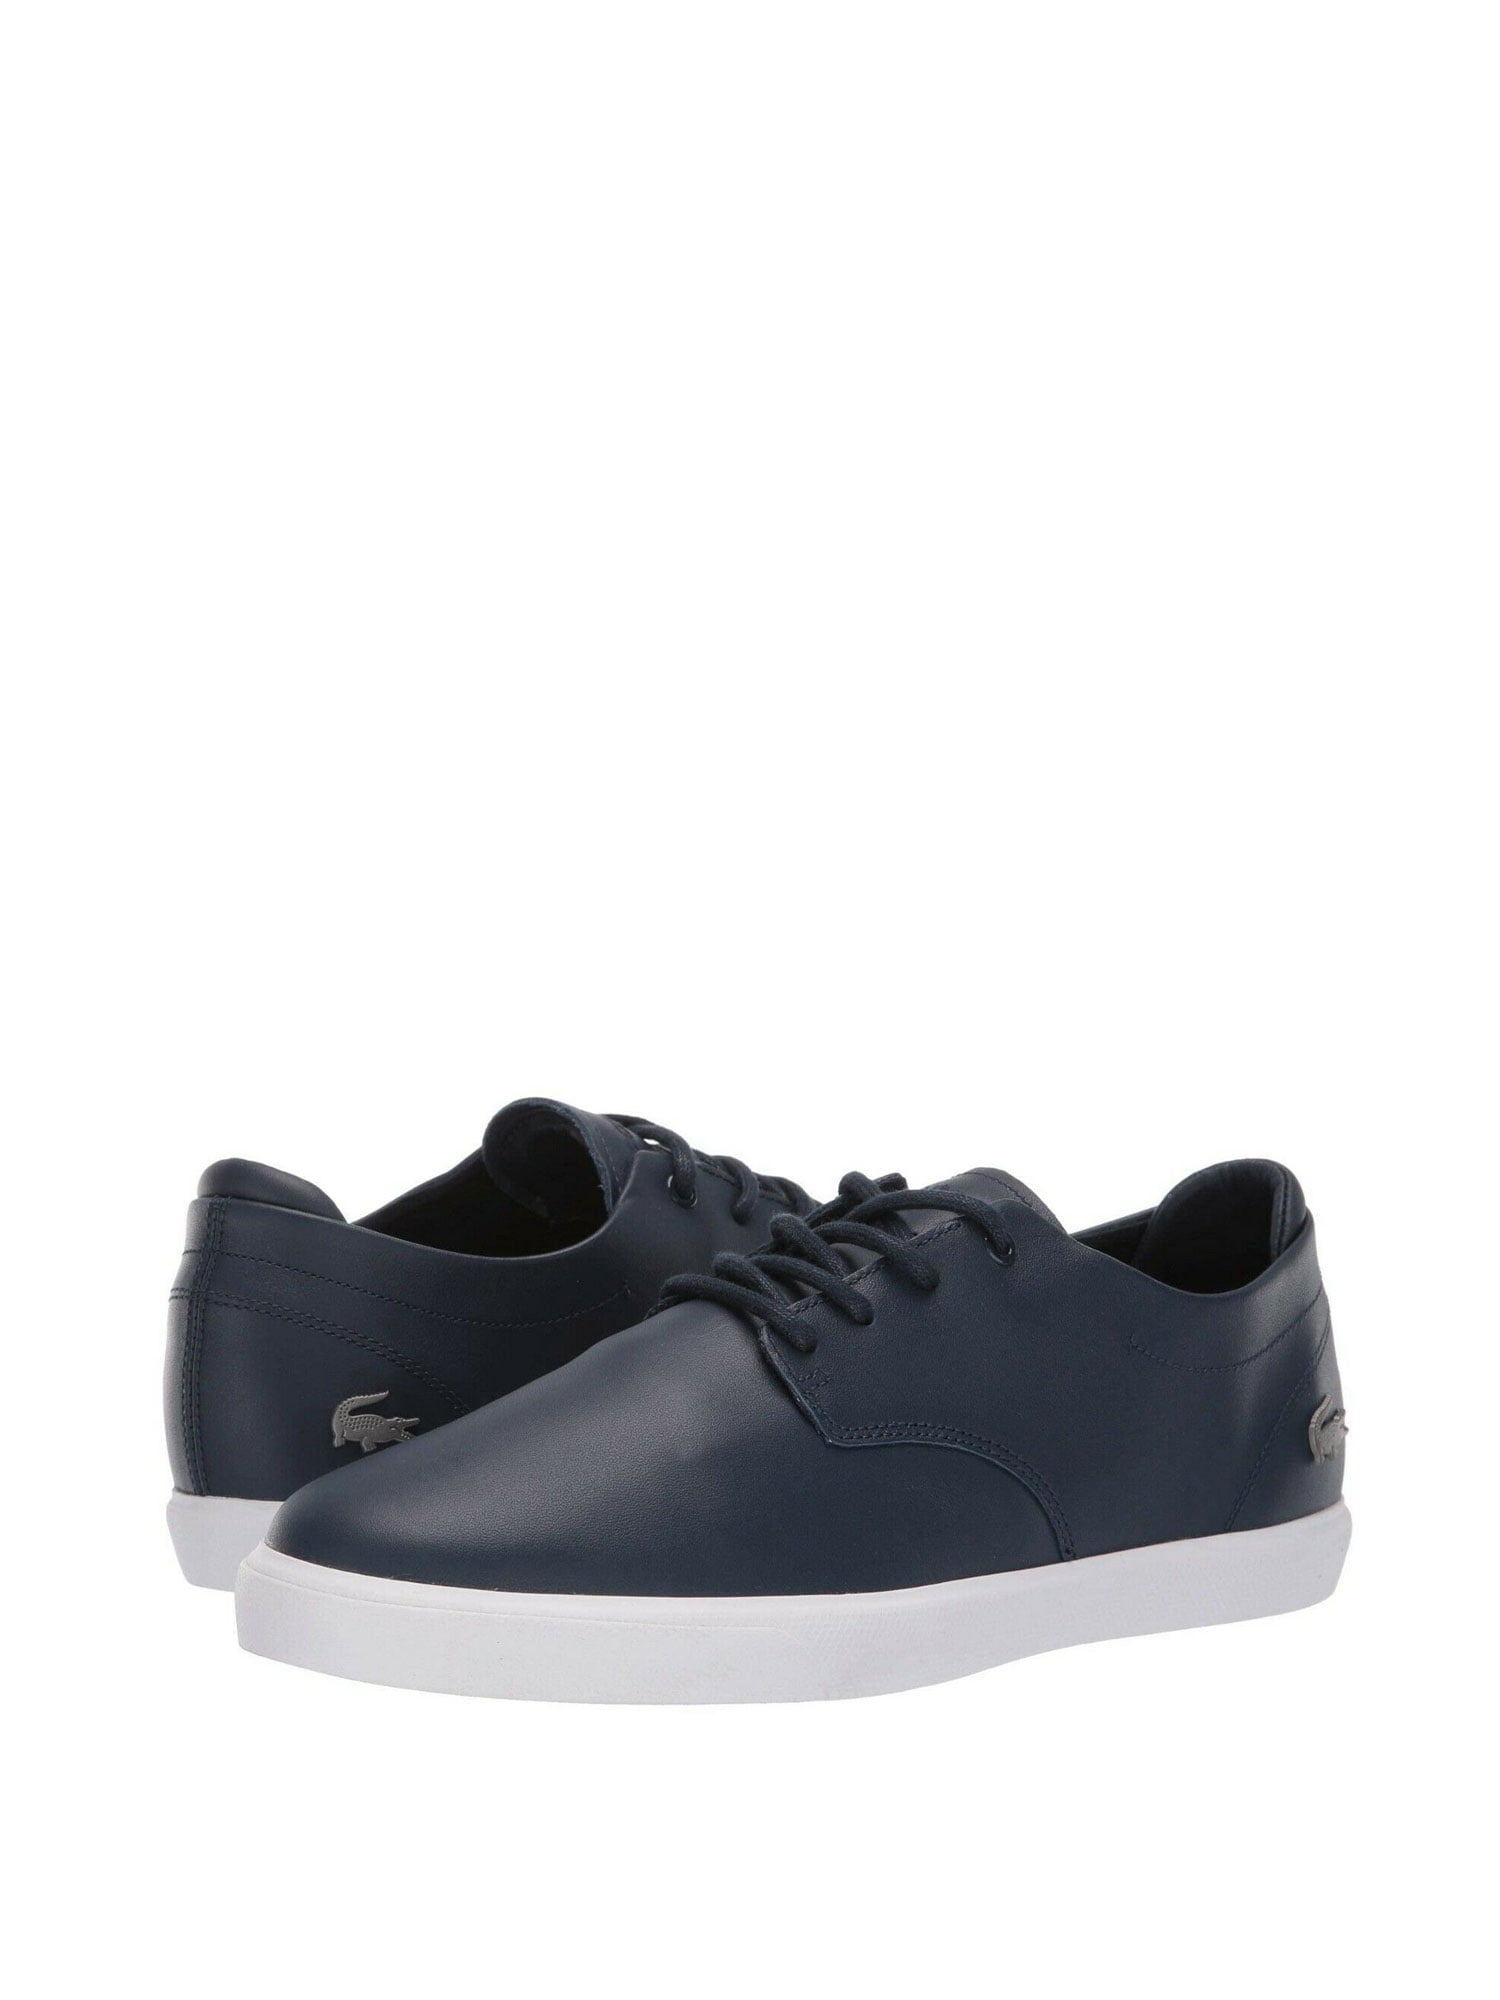 Lacoste Jump Serve Slip0121 1 CMA Men's Shoes Black-White 7 